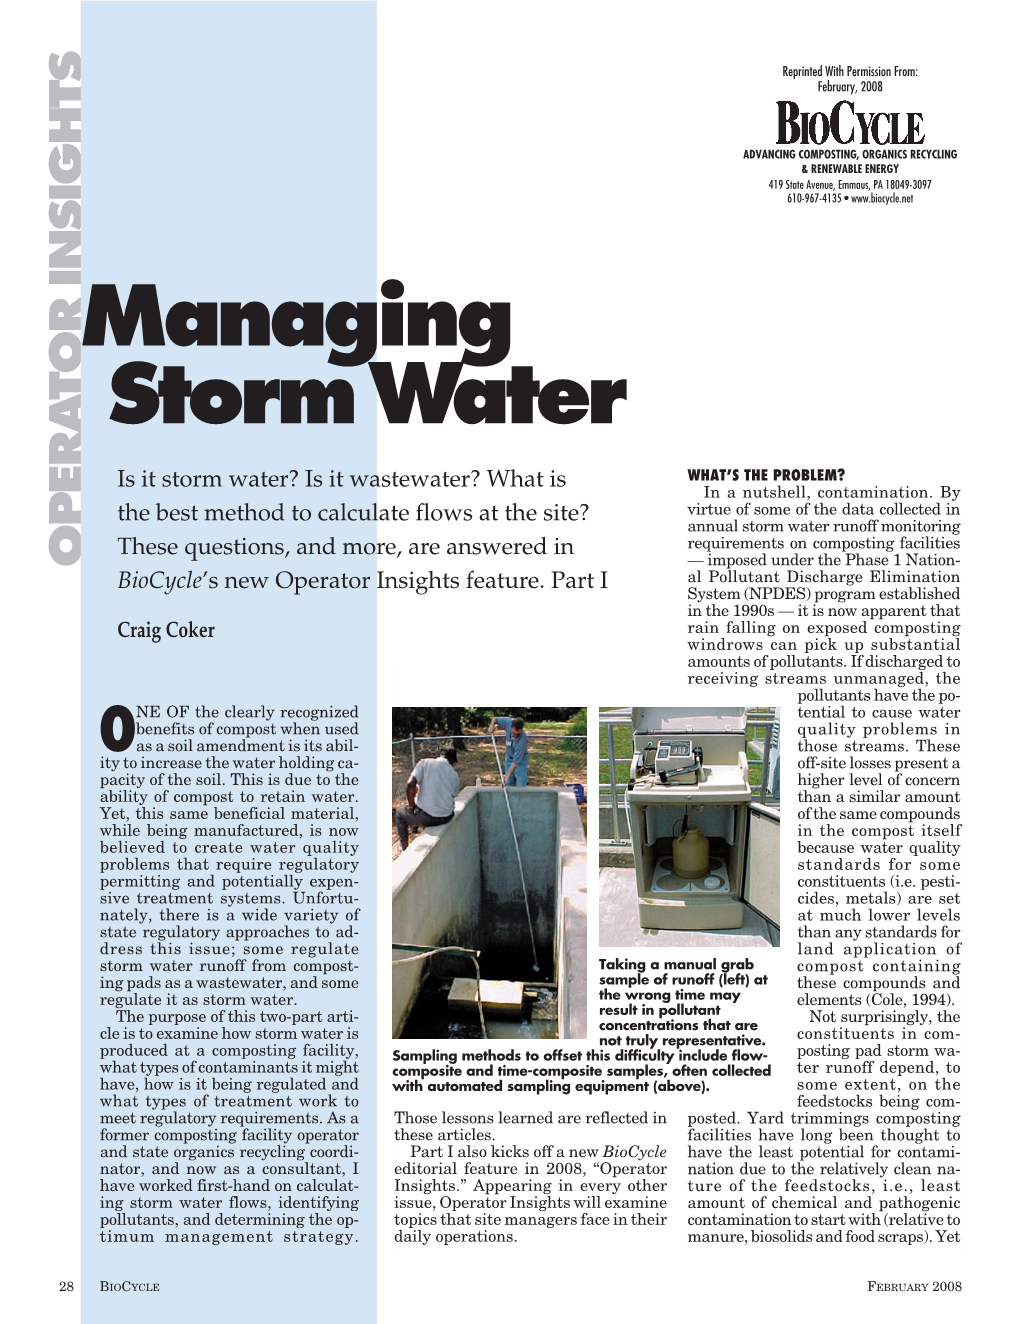 Managing Stormwater